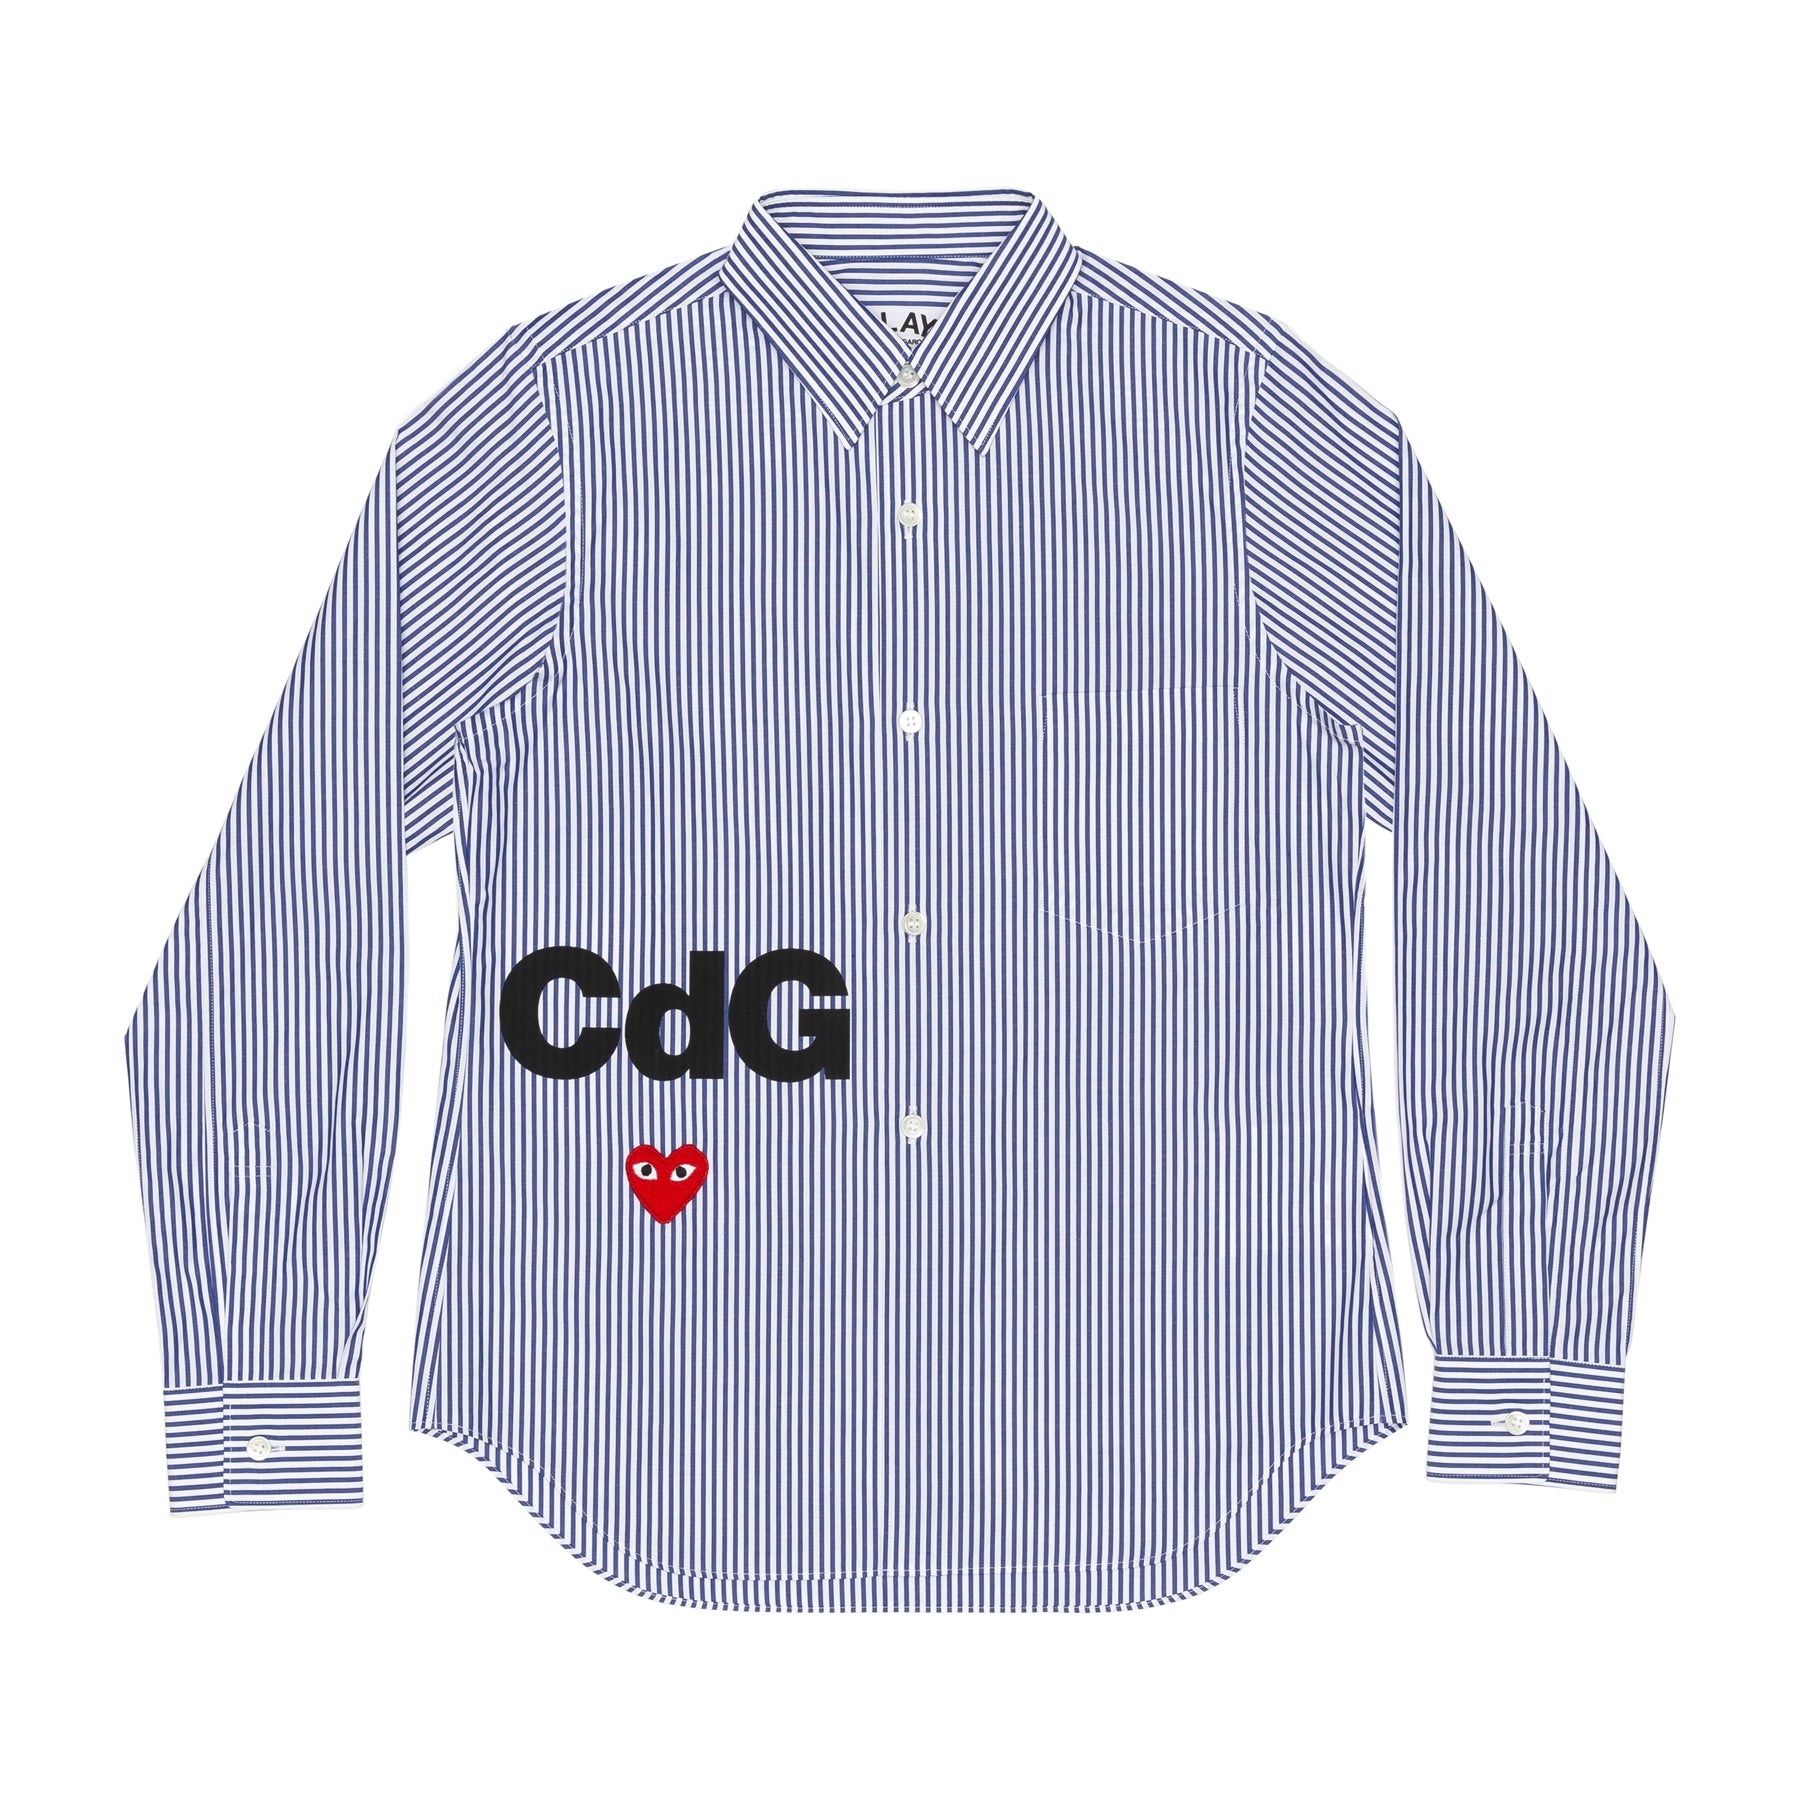 CDG PLAY - Cdg X Play Blouse - (Stripe) – DSMG E-SHOP